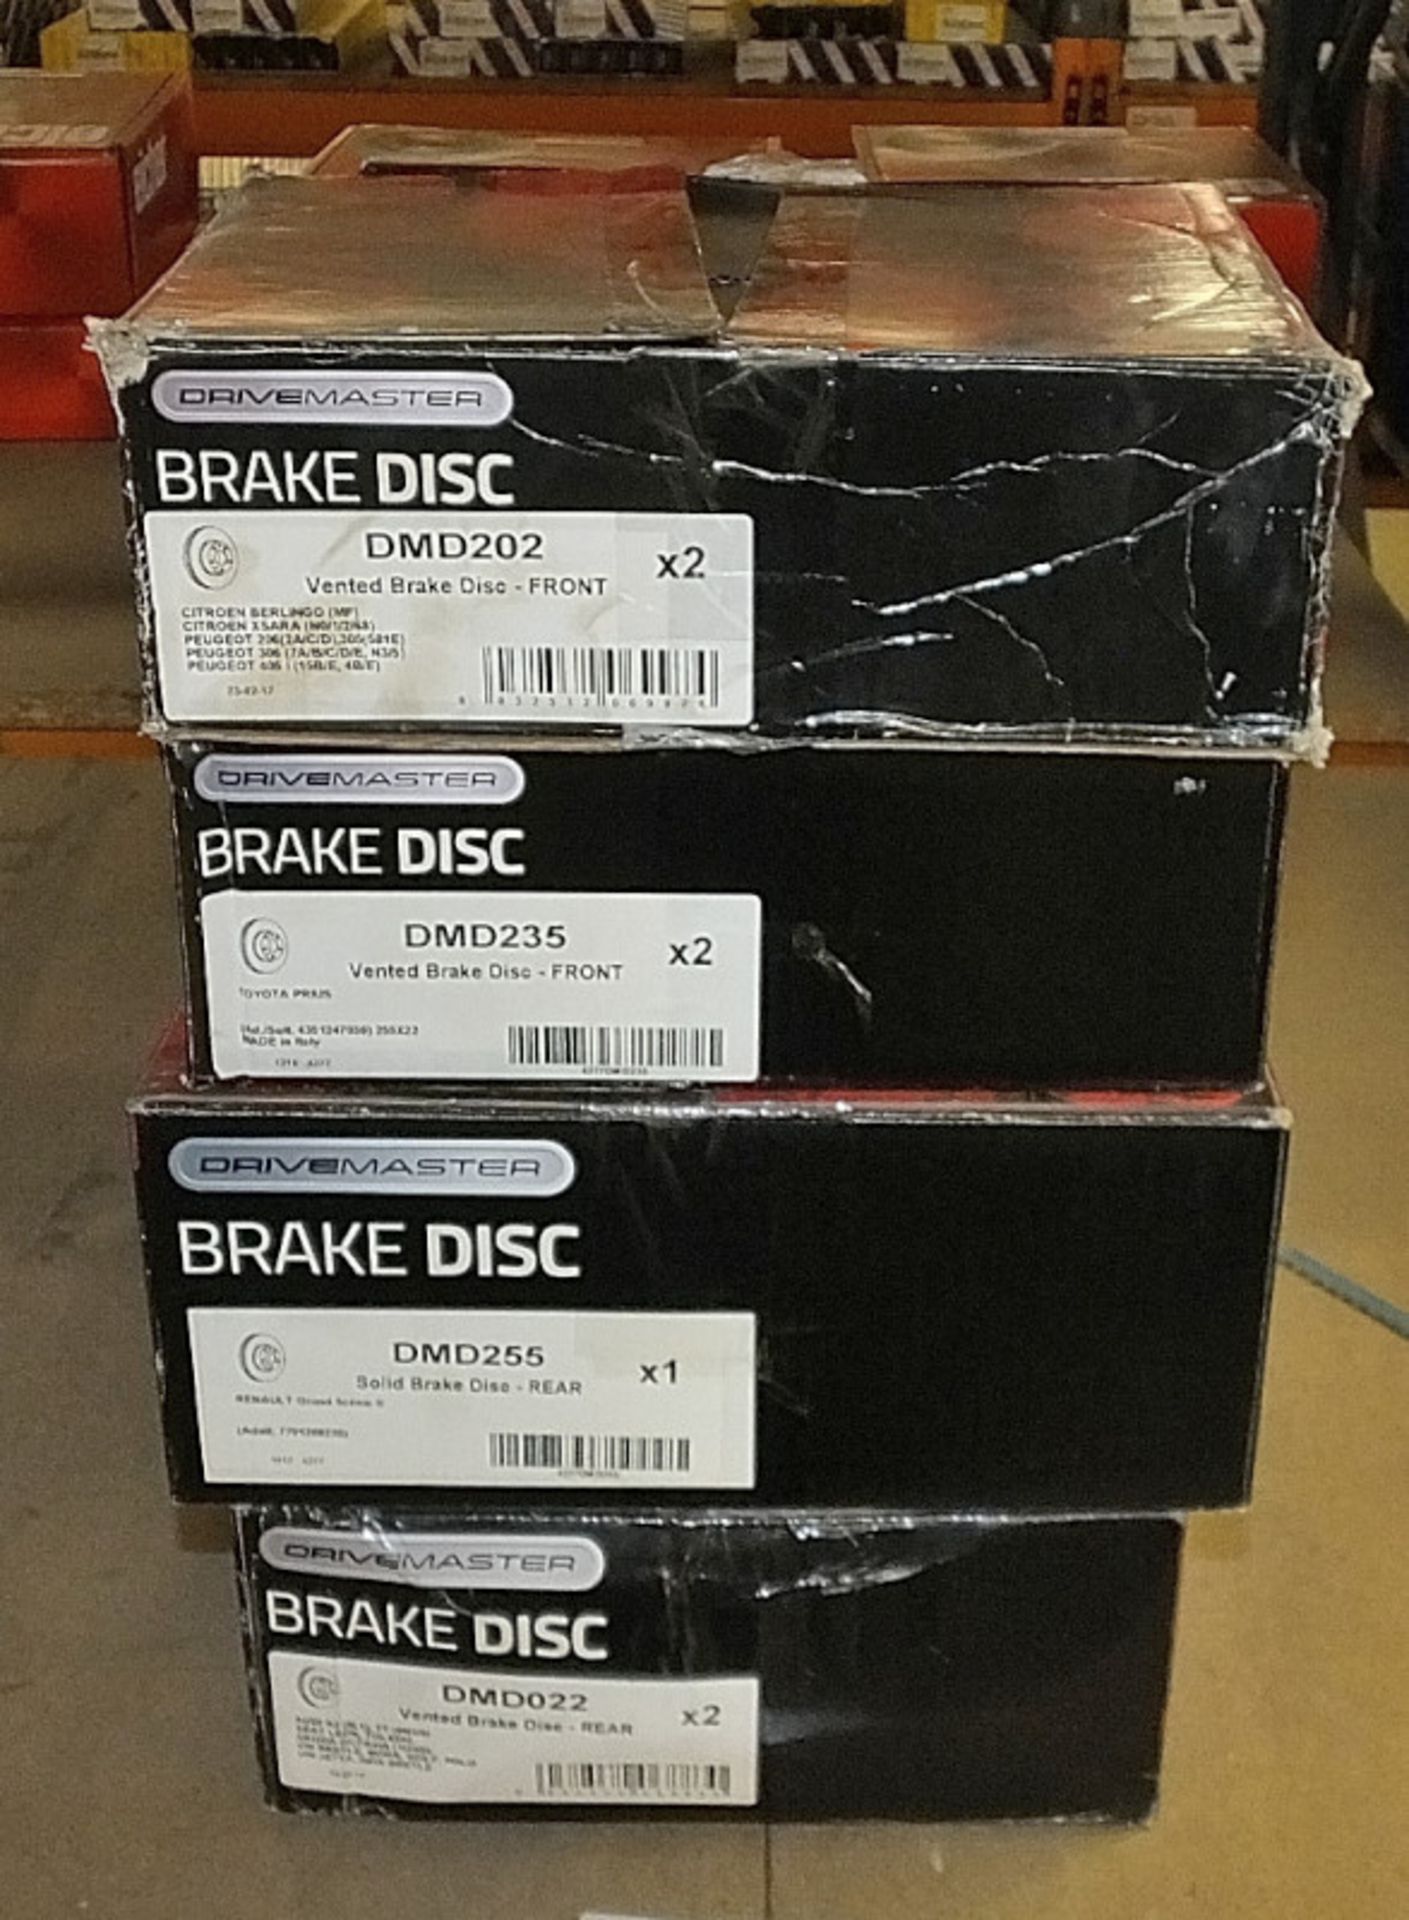 4x Drivemaster Brake Disc Sets - Models - DMD202, DMD235, DMD255, DMD022